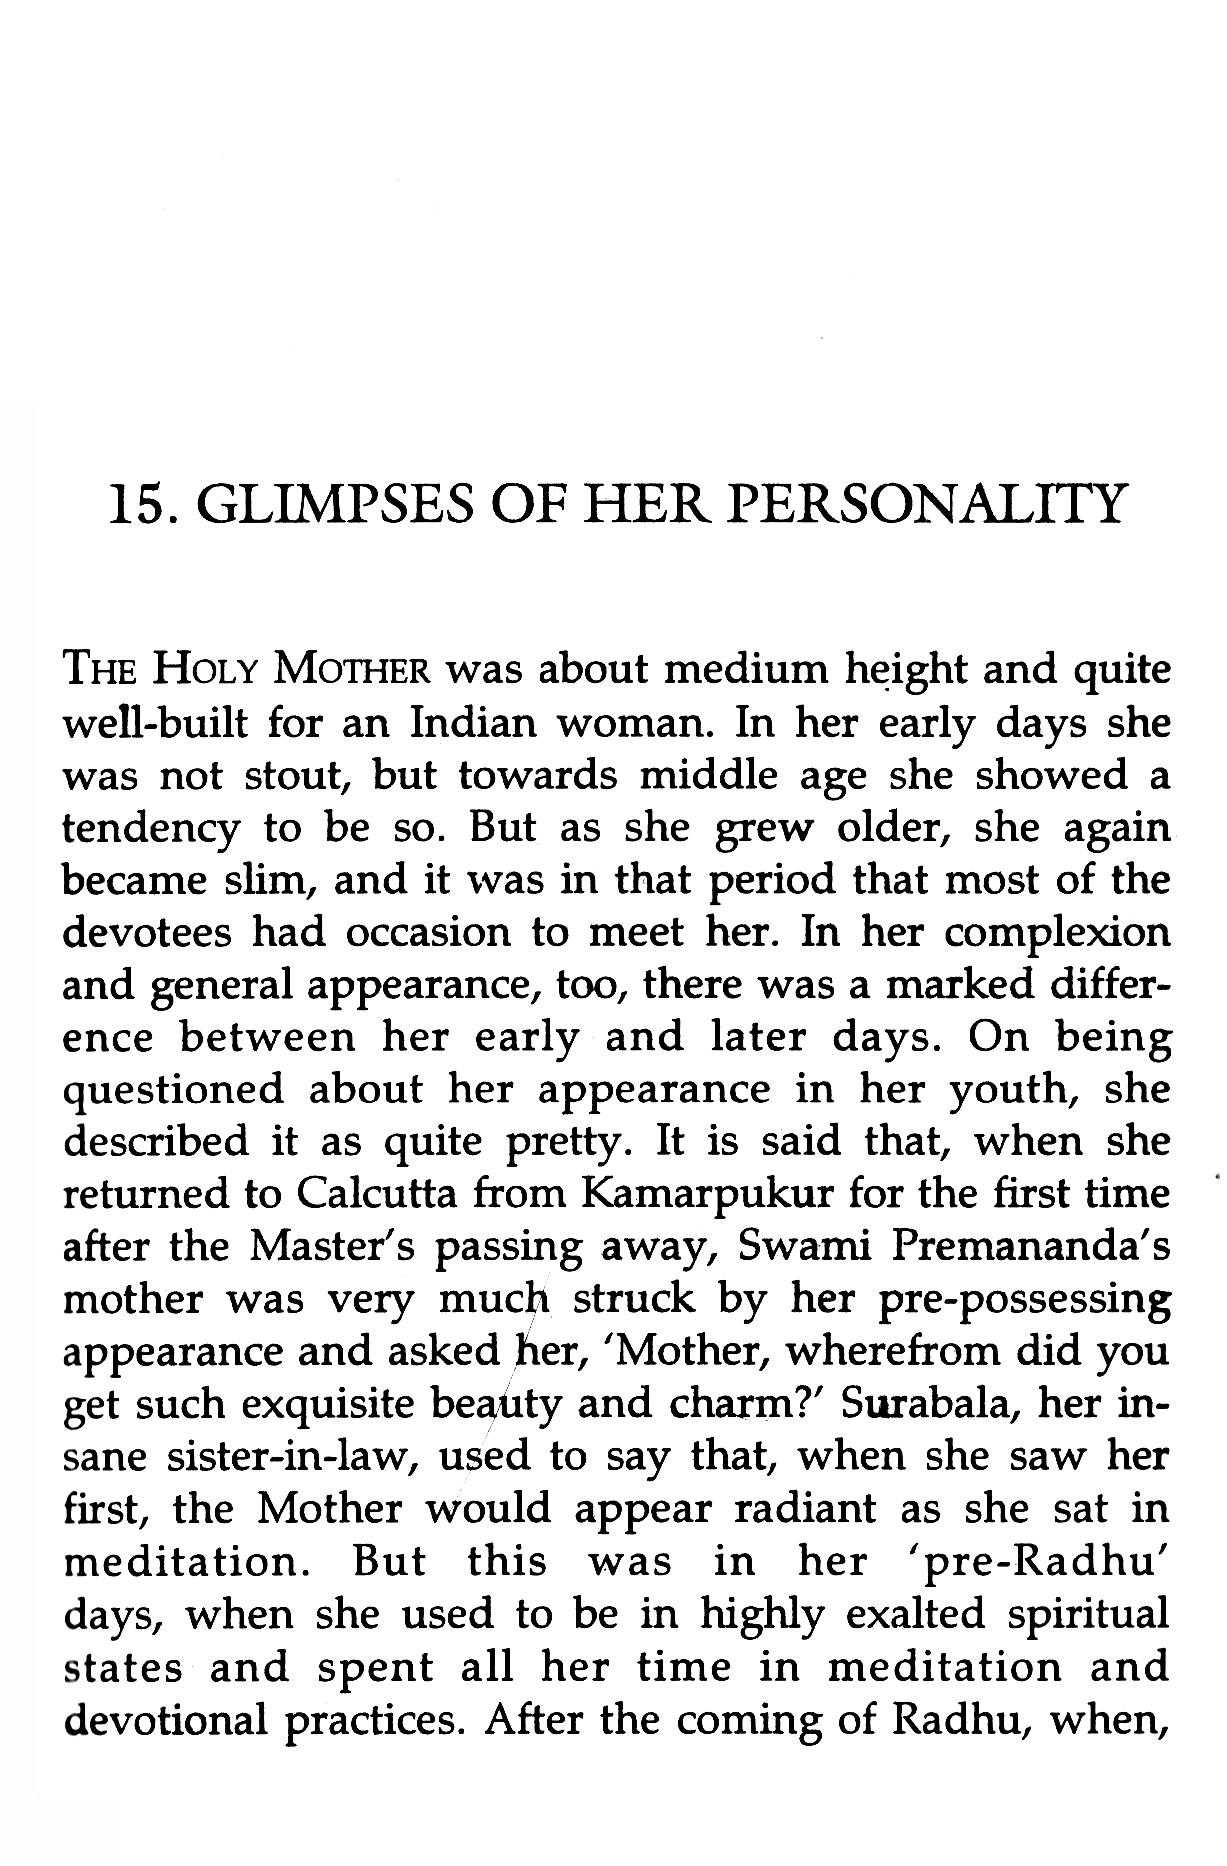 Sri Sarada Devi - The Holy Mother